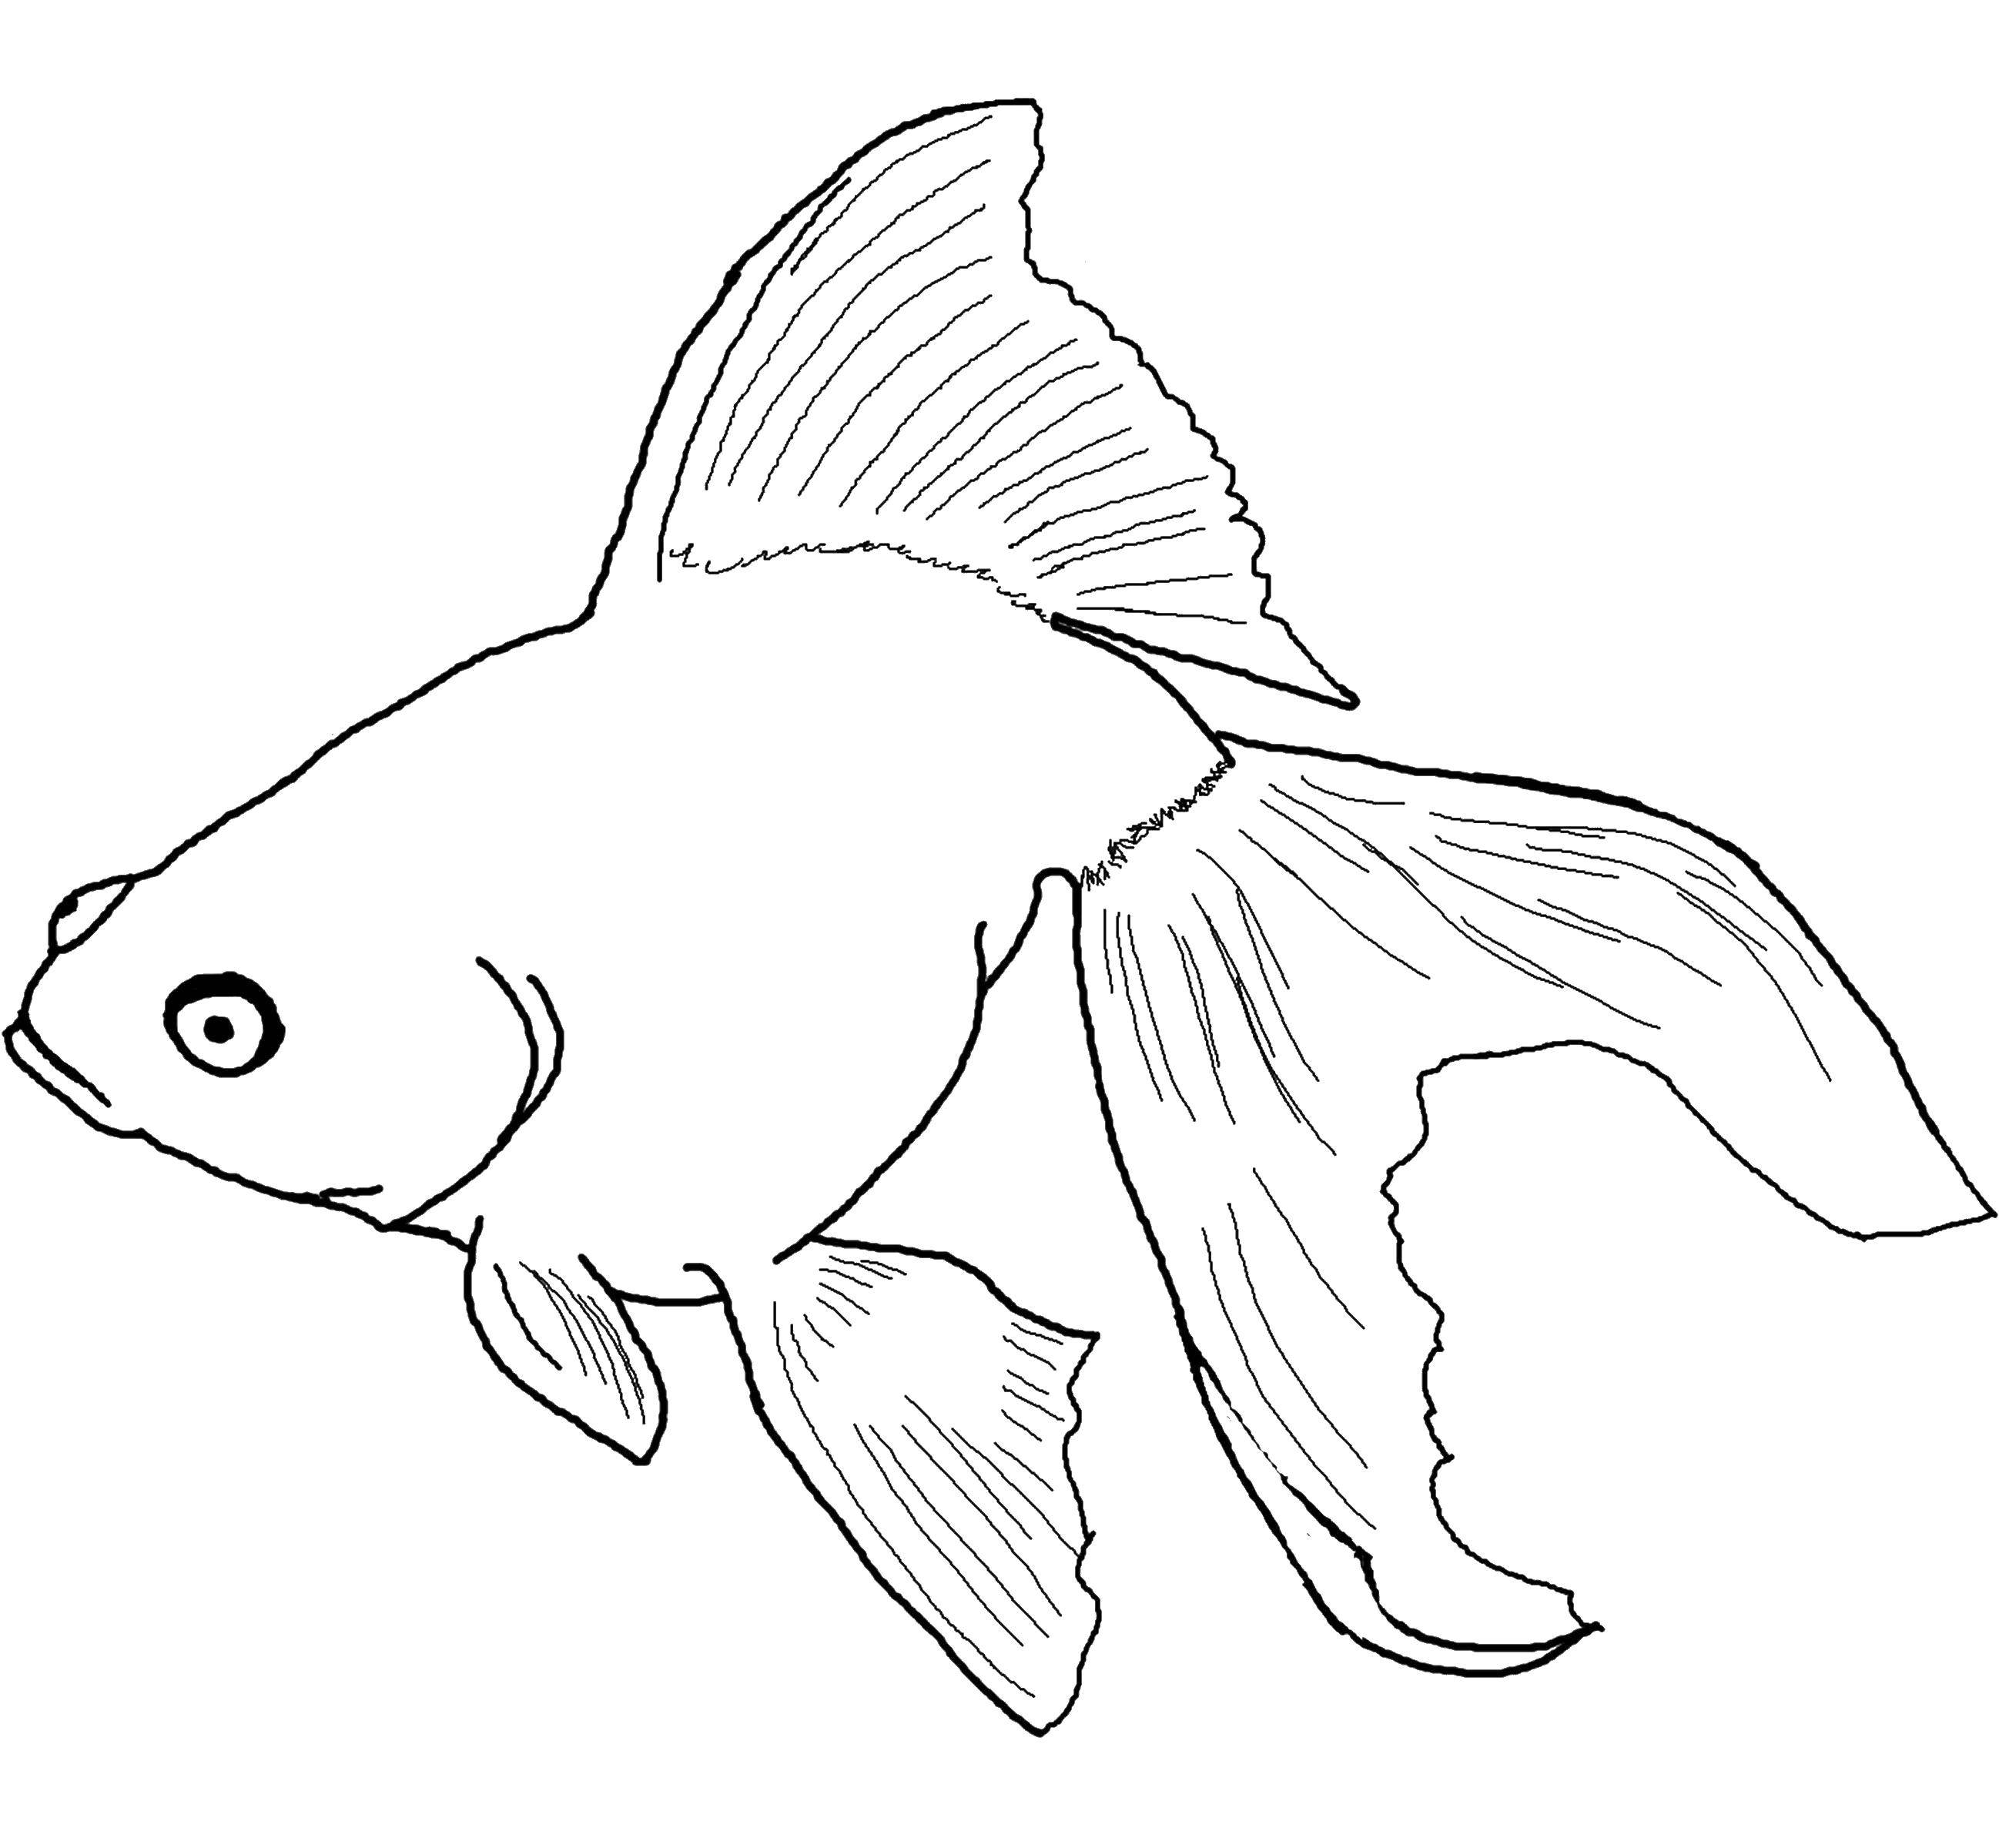 Coloring Goldfish. Category fish. Tags:  Underwater world, fish, totota fish.